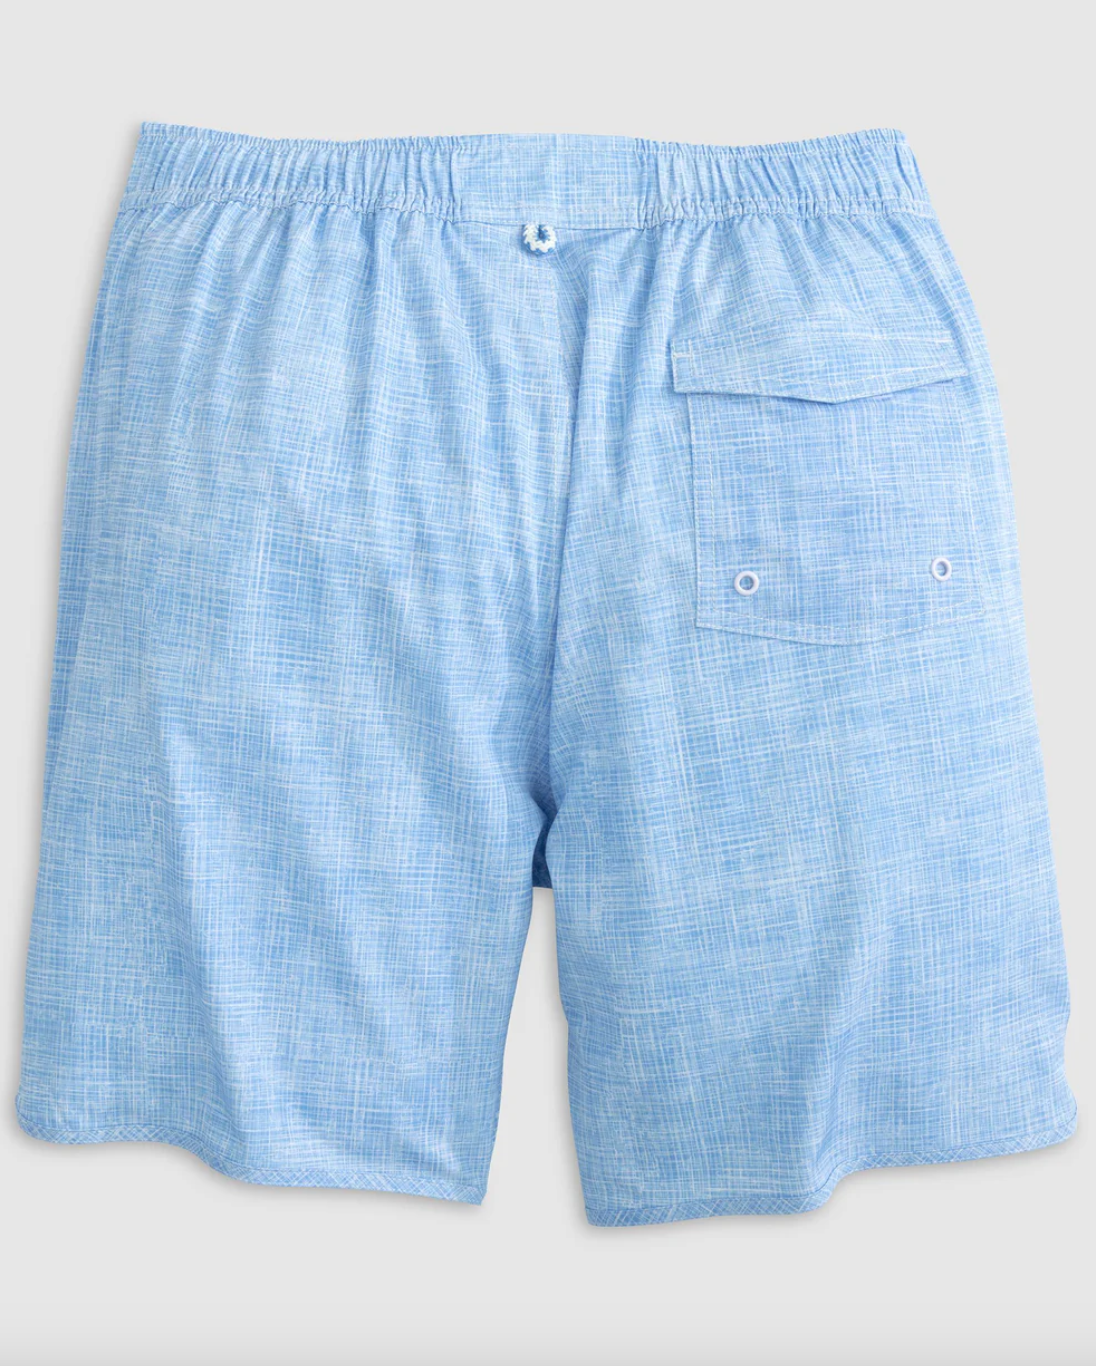 Surf Shorts 7"-Gulf Blue